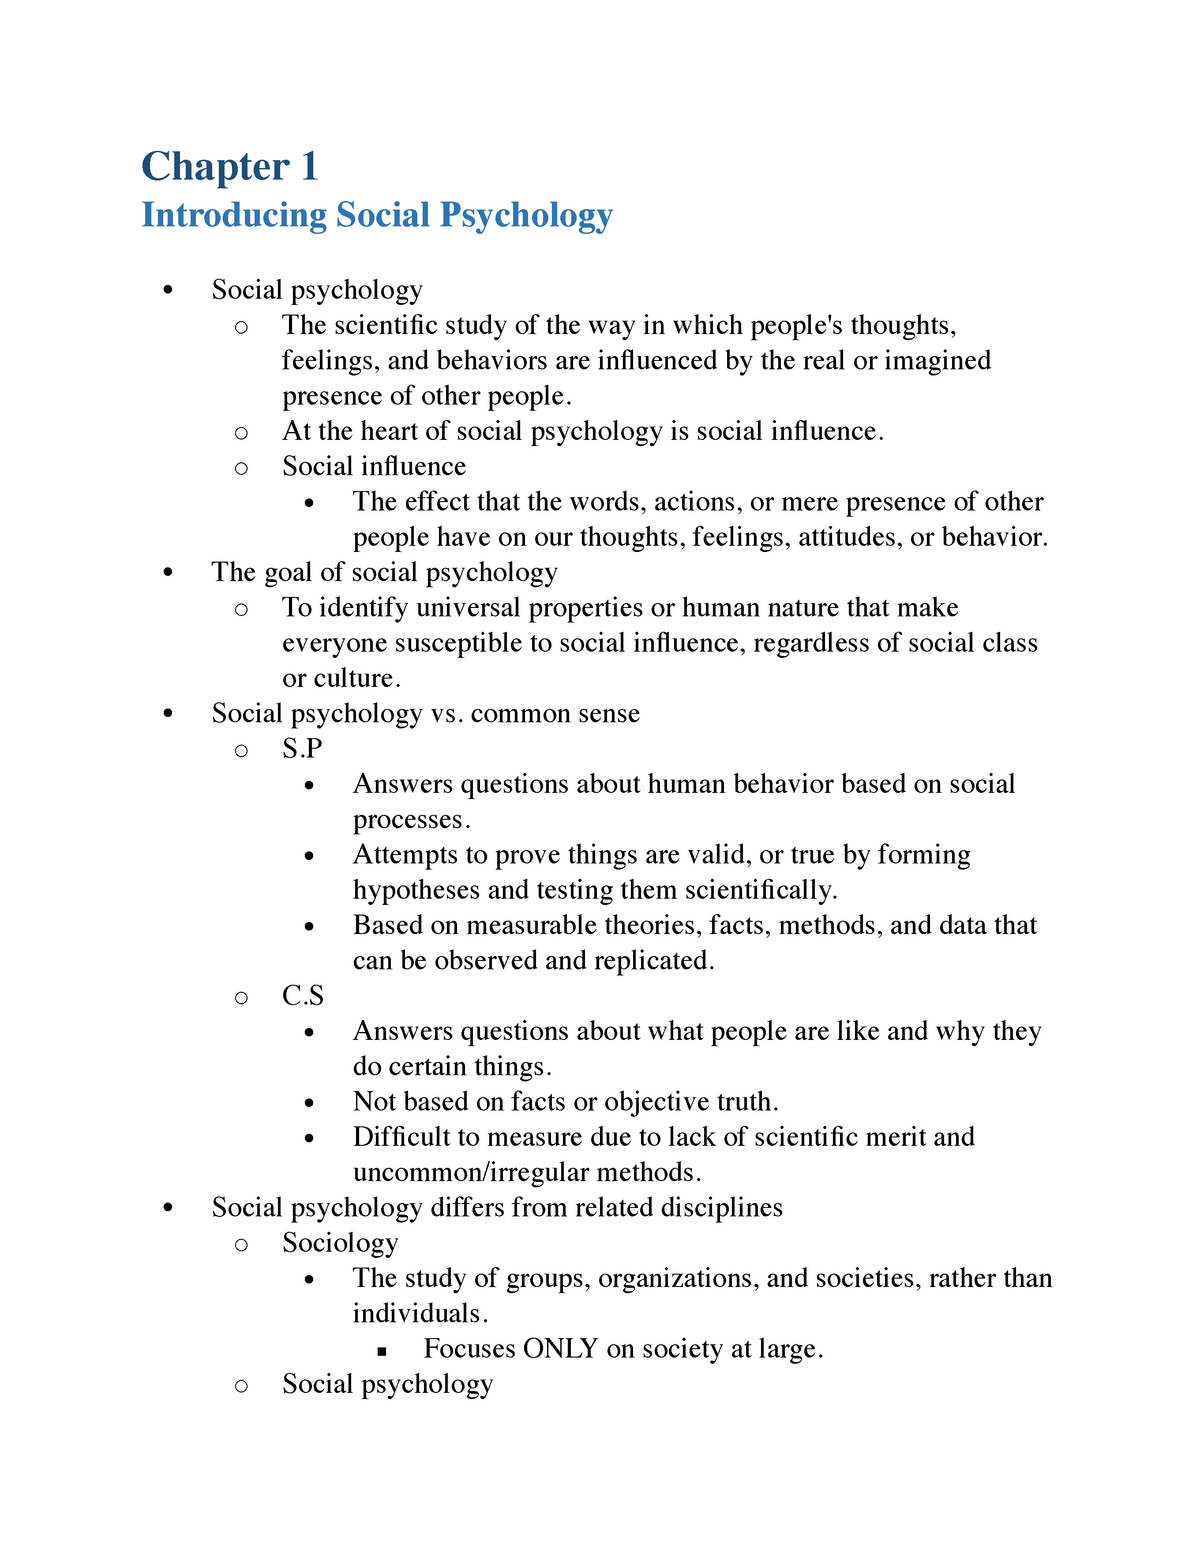 an essay about social psychology